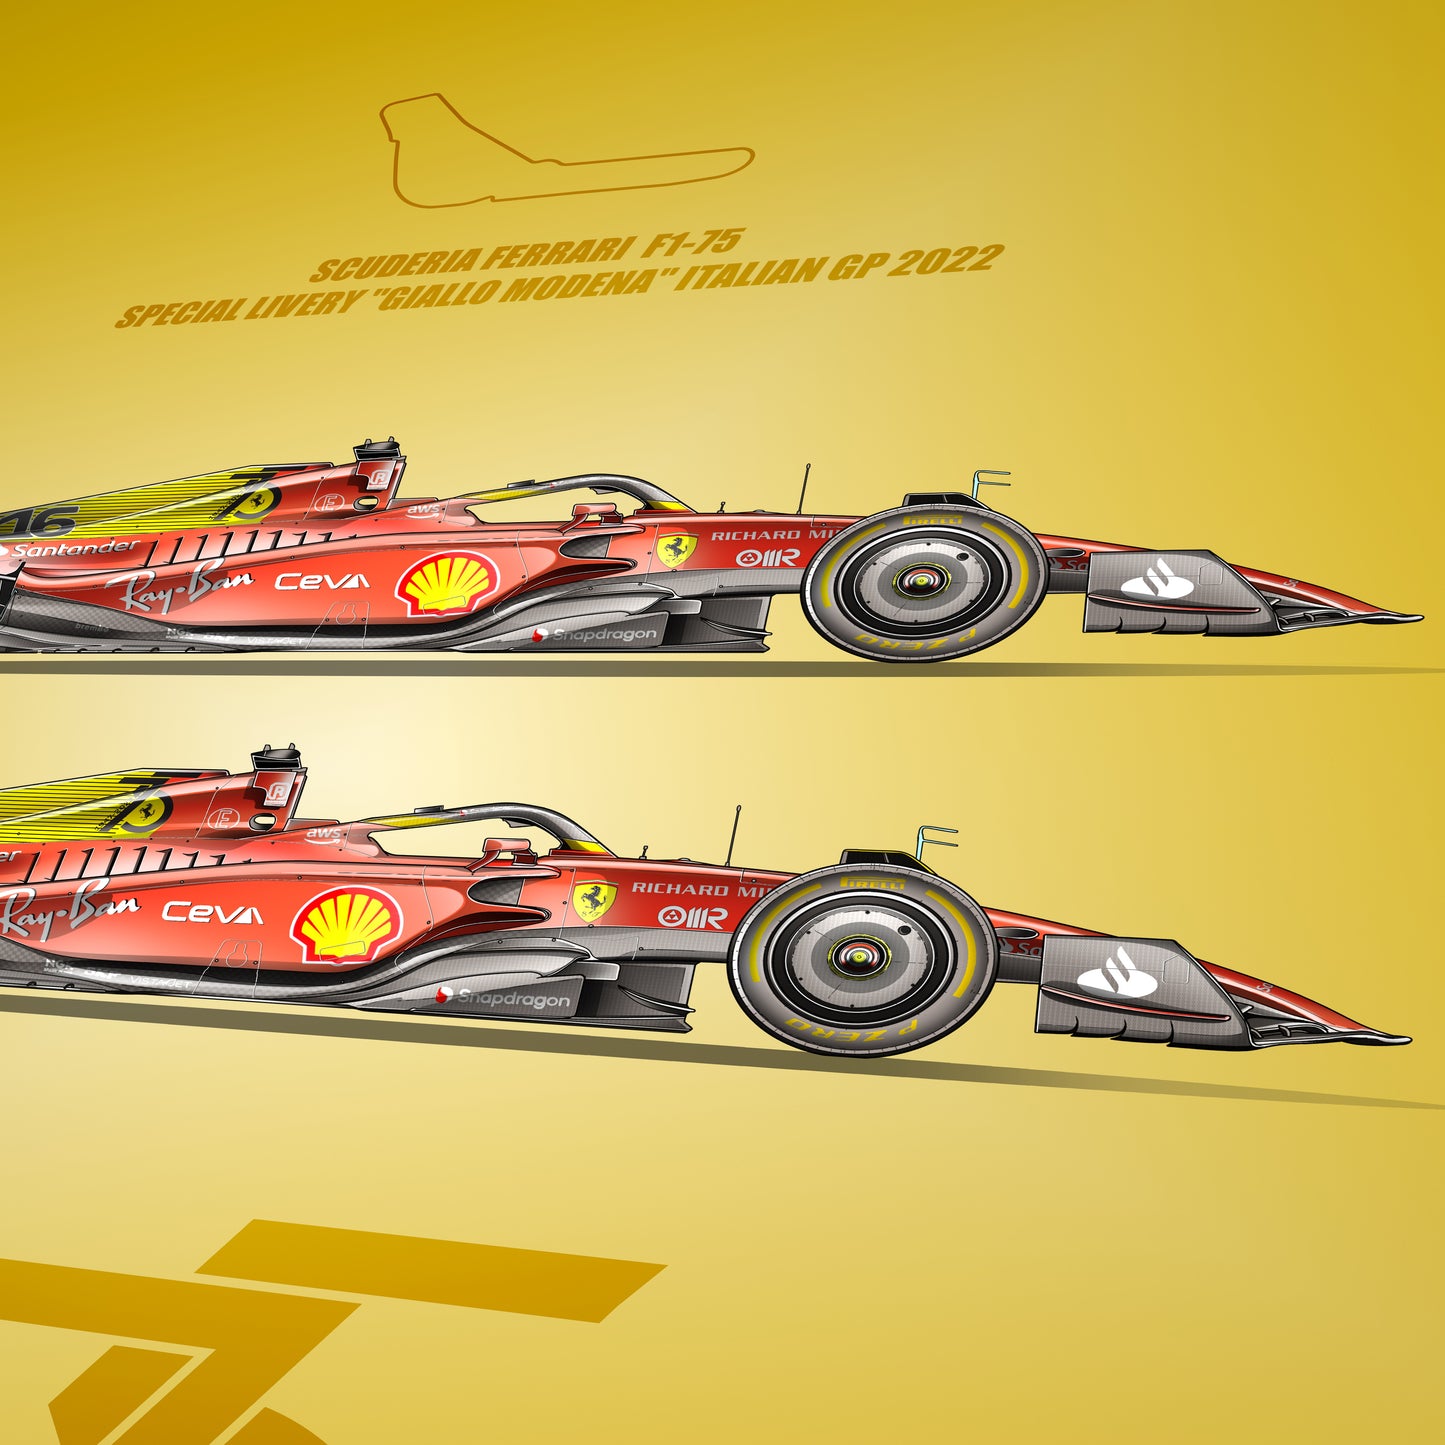 Scuderia Ferrari F1-75 "Giallo Modena 75 years" Leclerc and Sainz  - Poster - A2/A3